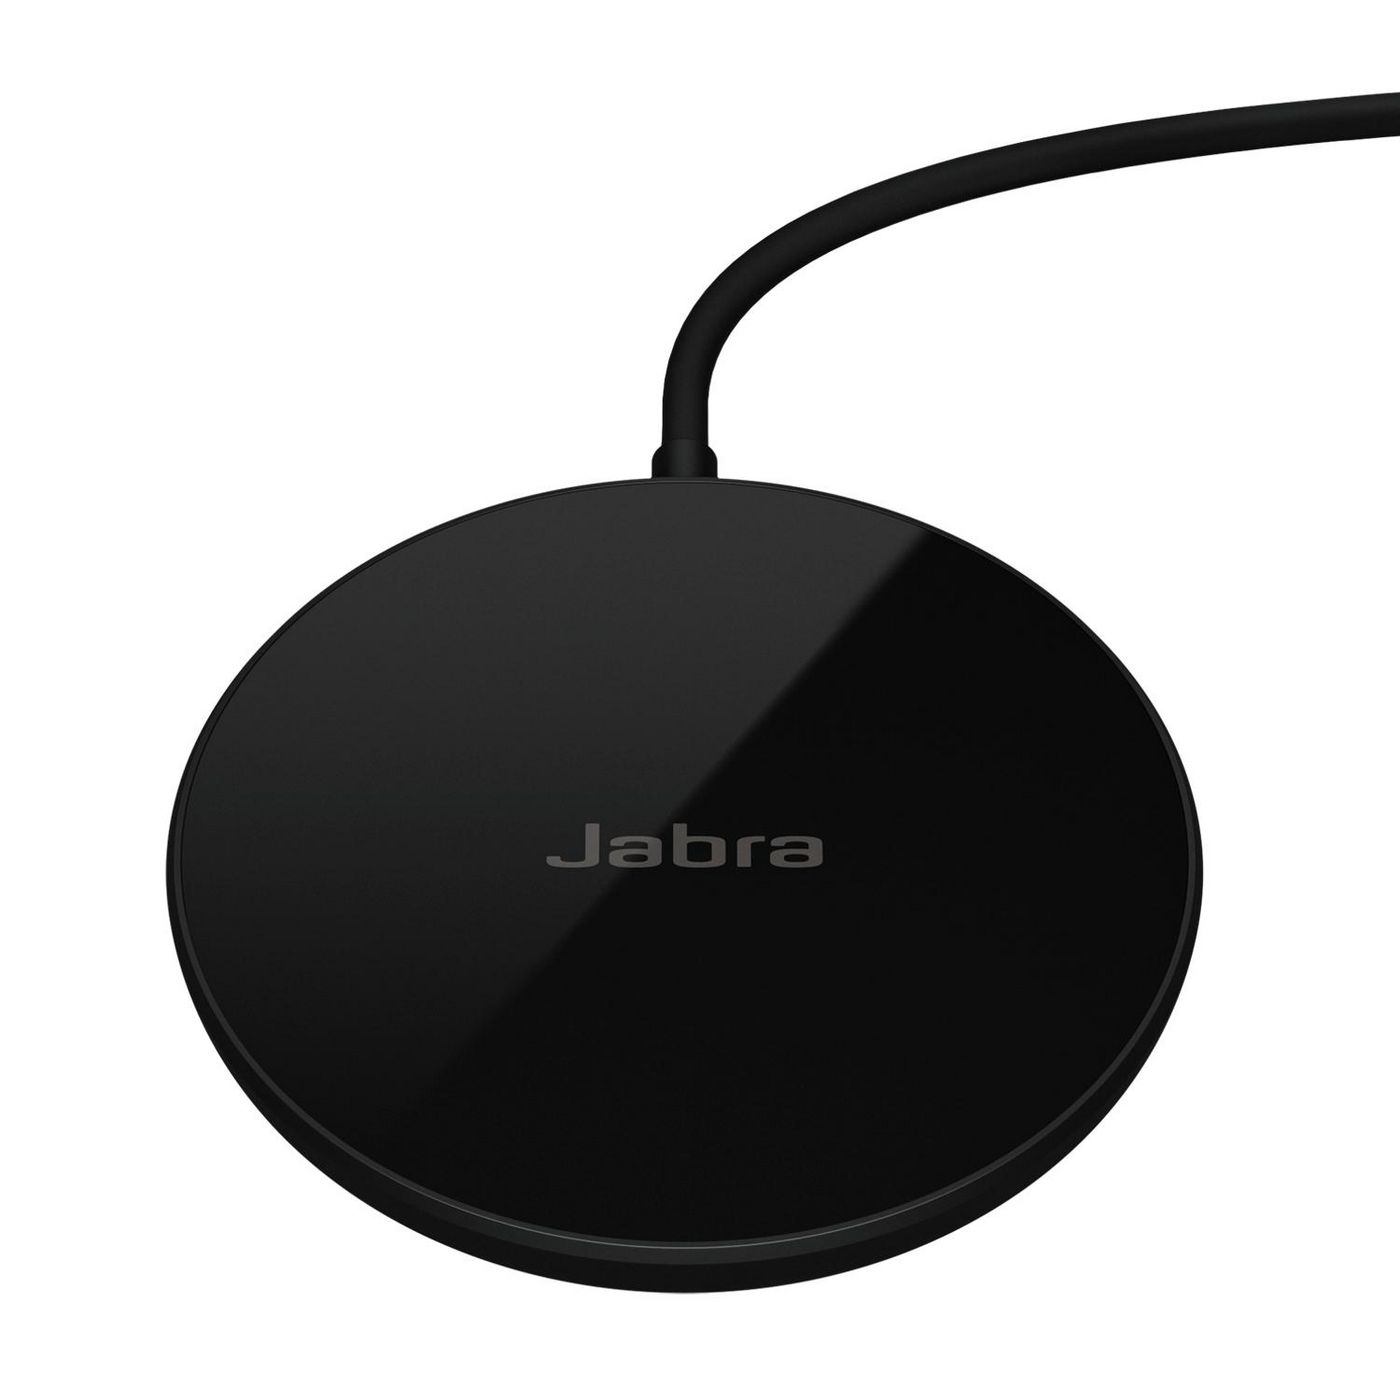 Jabra 14207-92 W128298500 Wireless Charging Pad 